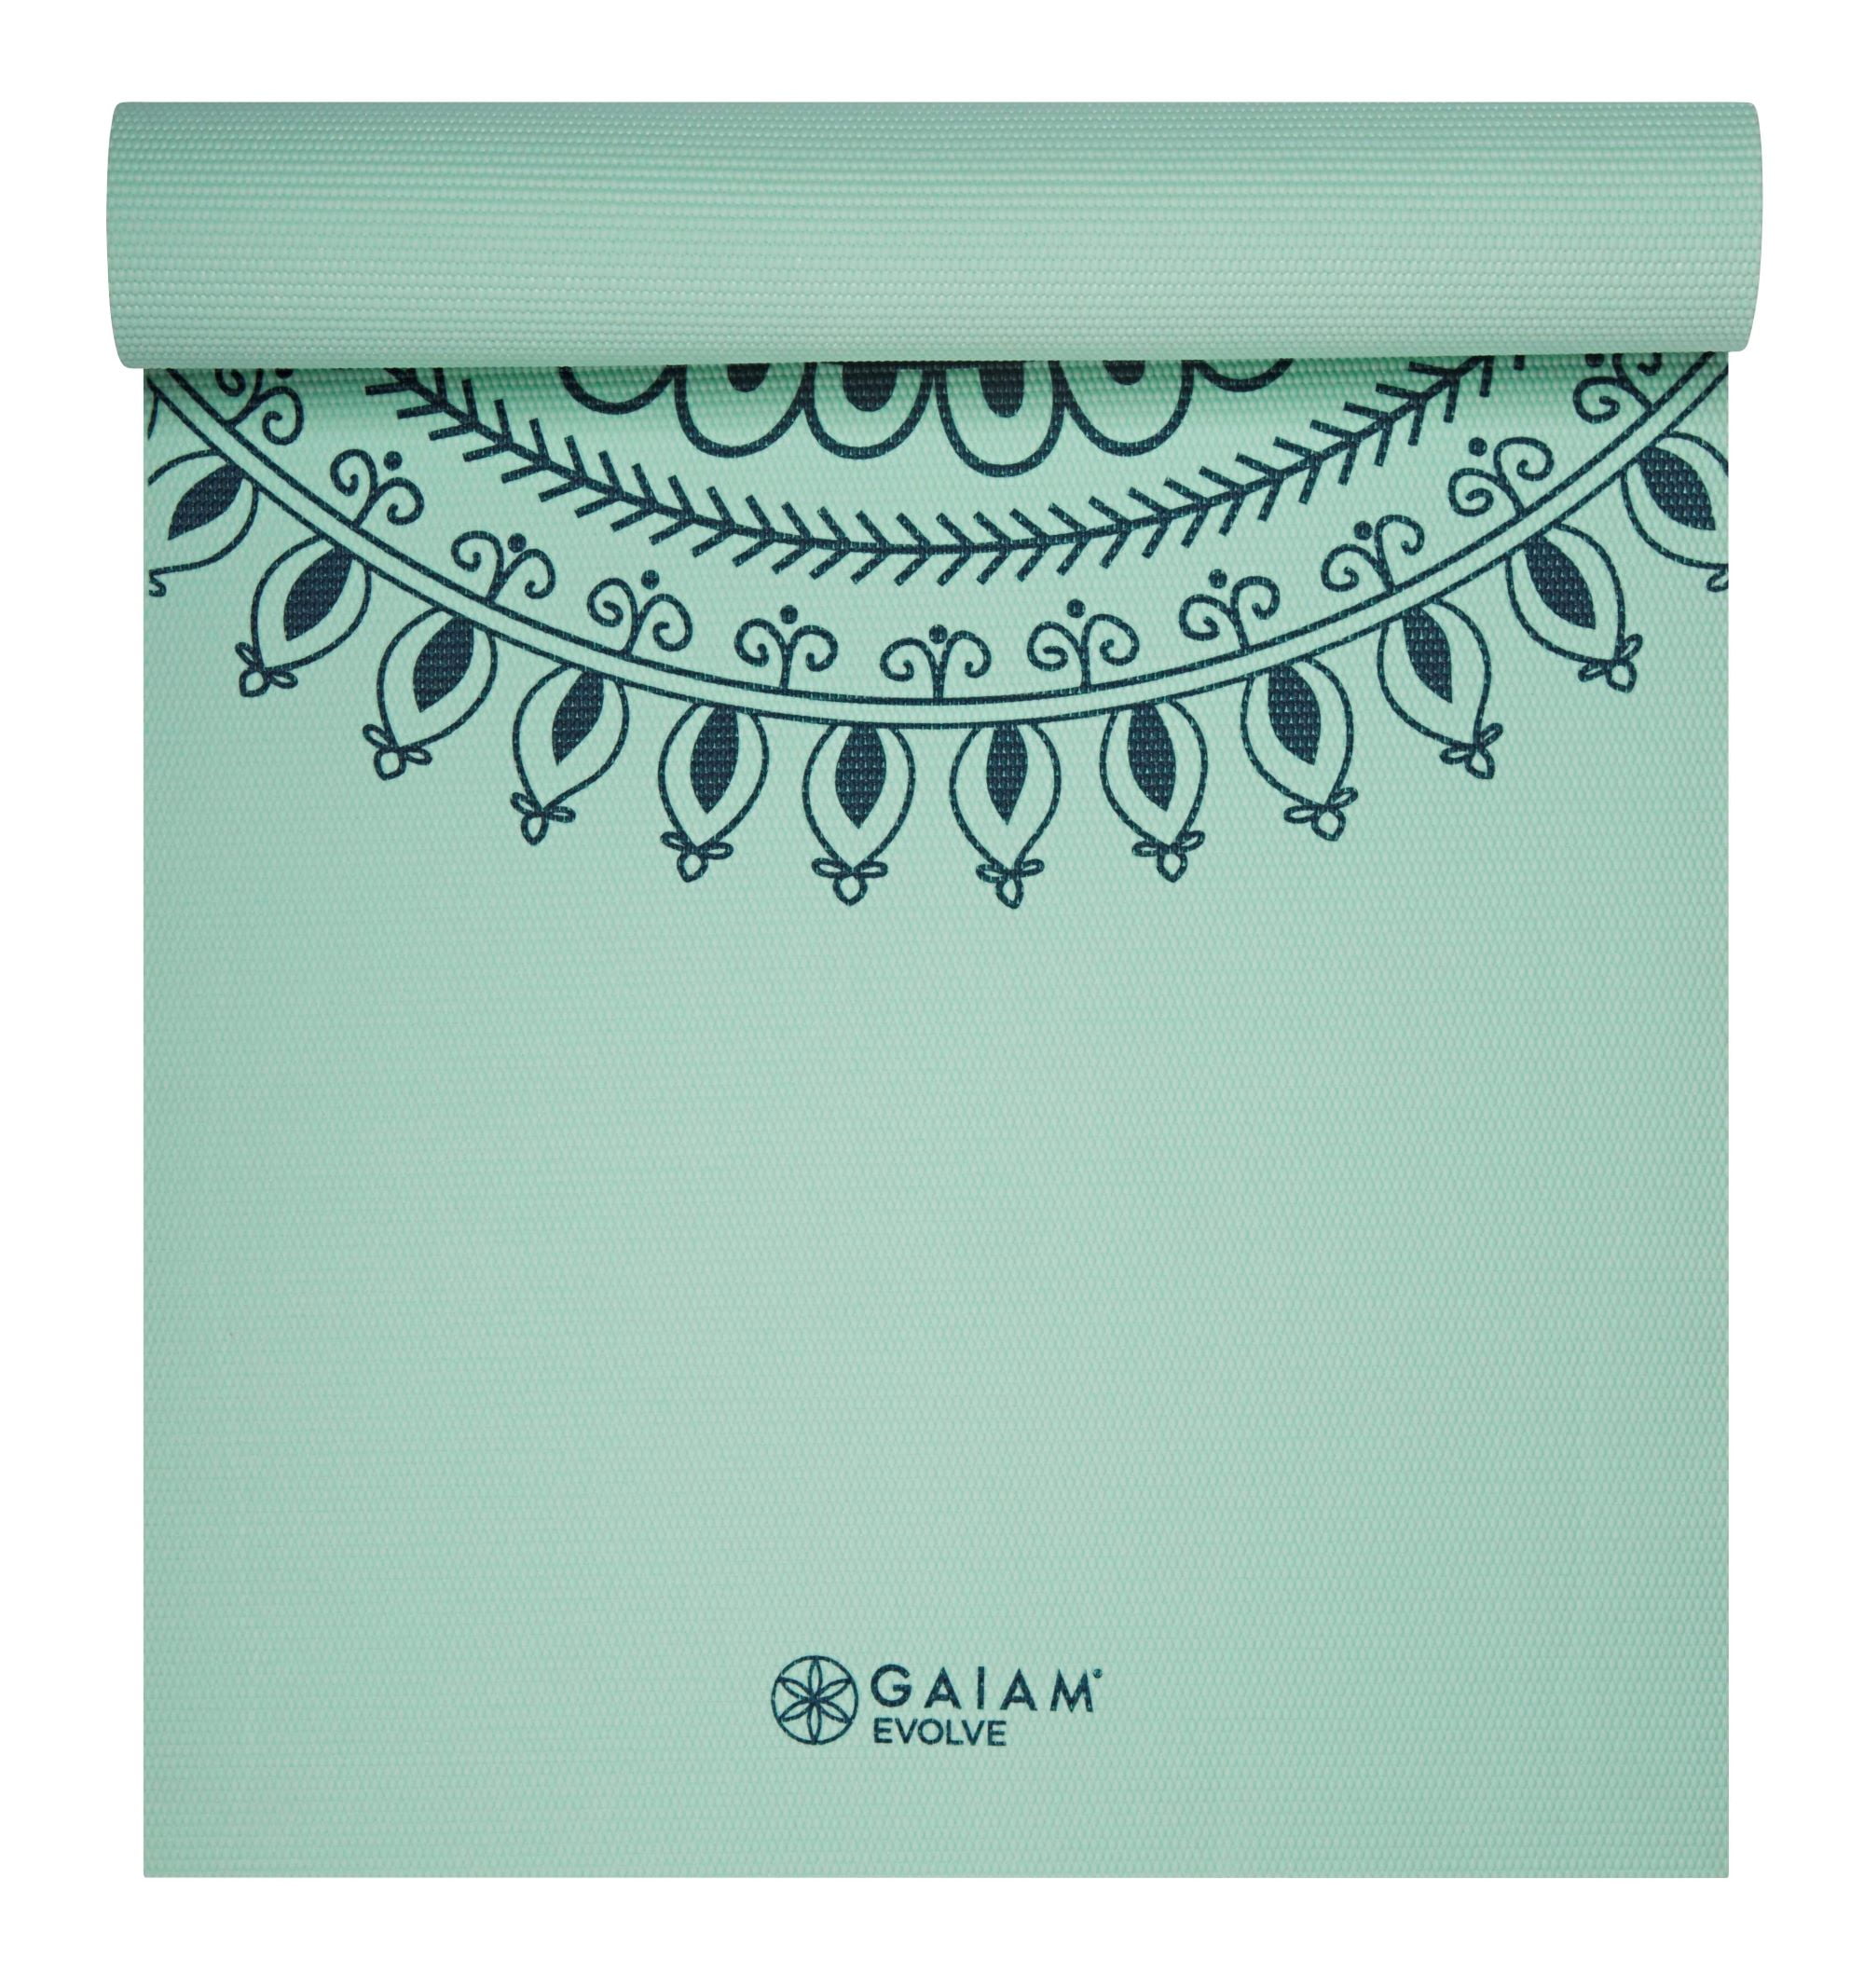 Evolve by Gaiam 5mm Printed Yoga Mat, Mint Marrakesh, PVC